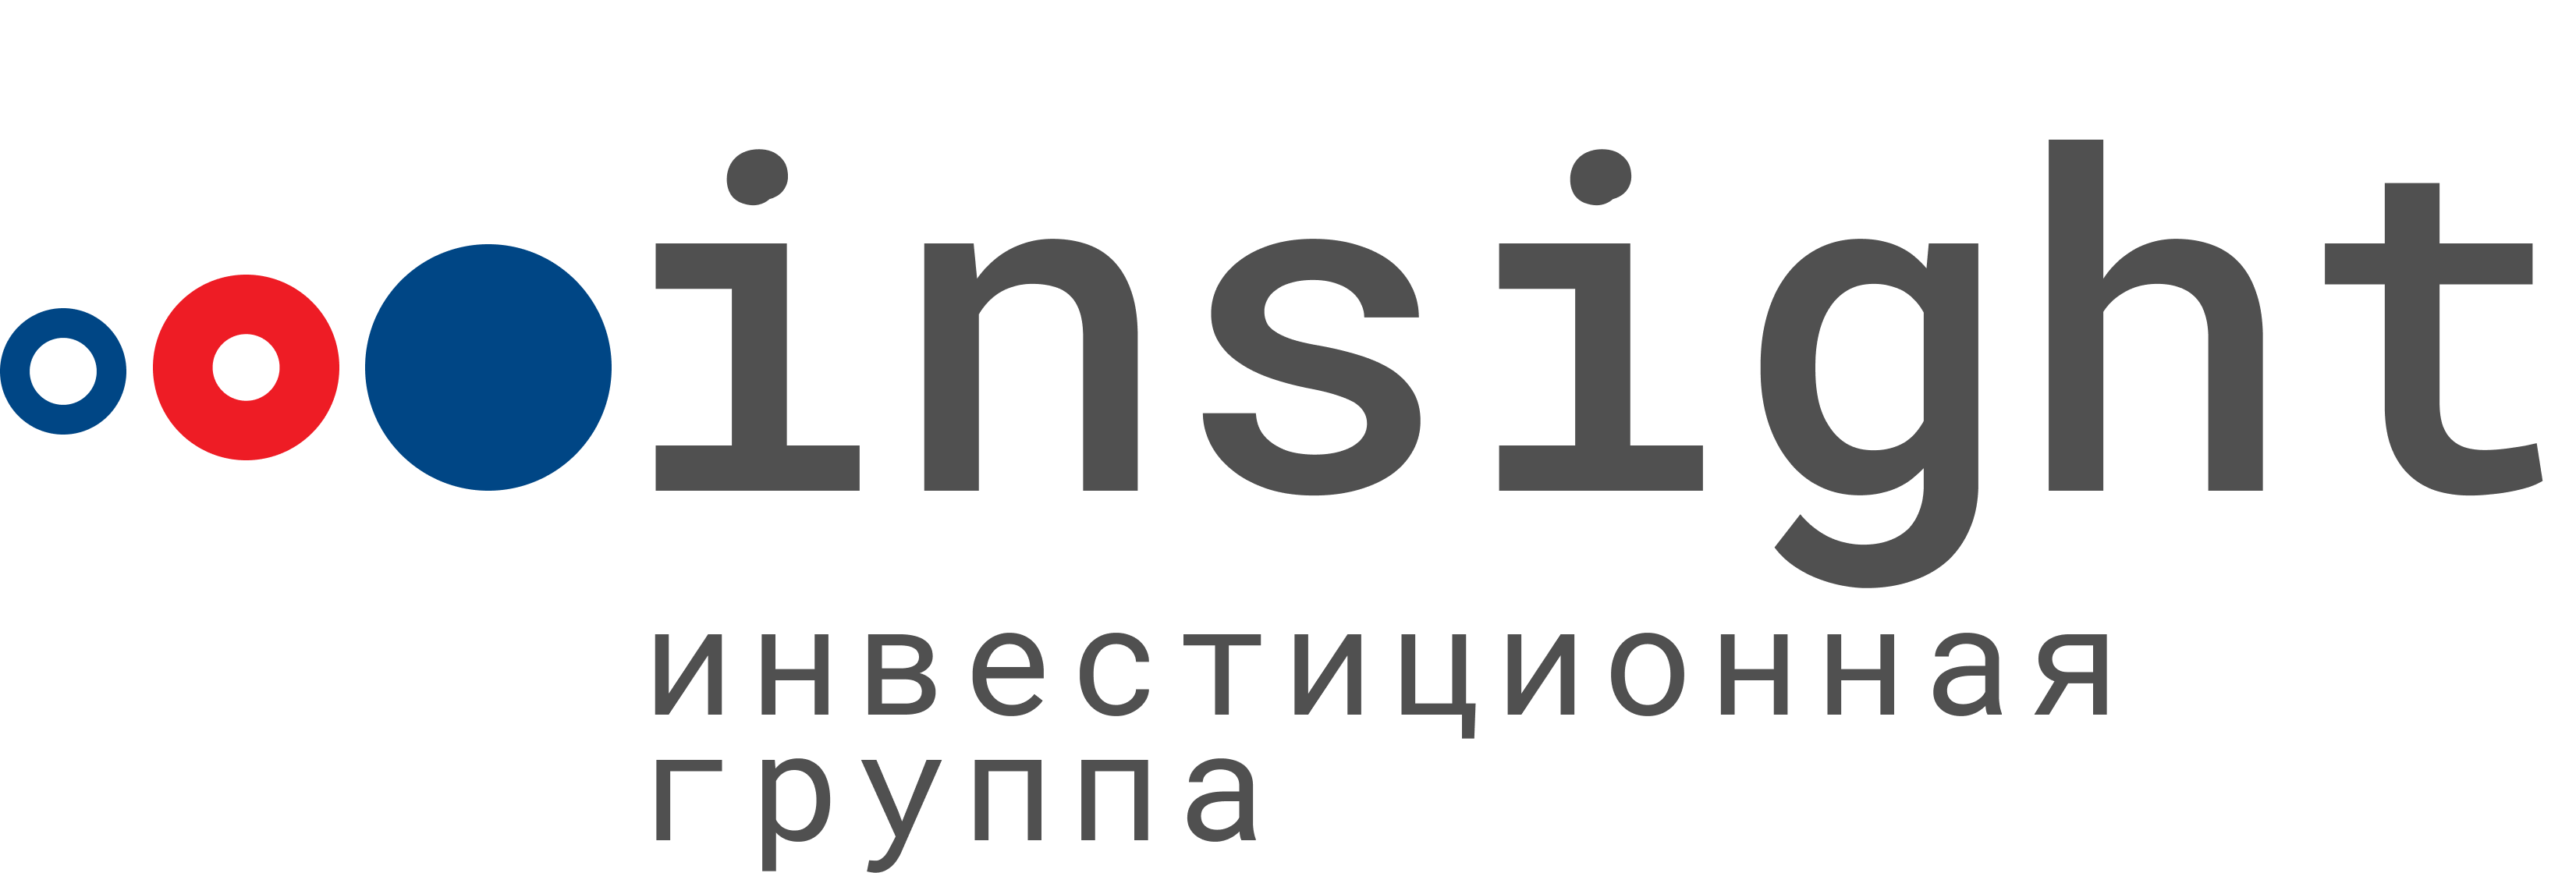 Инсайт москва. ООО Инсайт. Insight инвестиционная группа. Инвестиционная группа Insight logo. Инвестиционная компания «Инсайт» логотип.